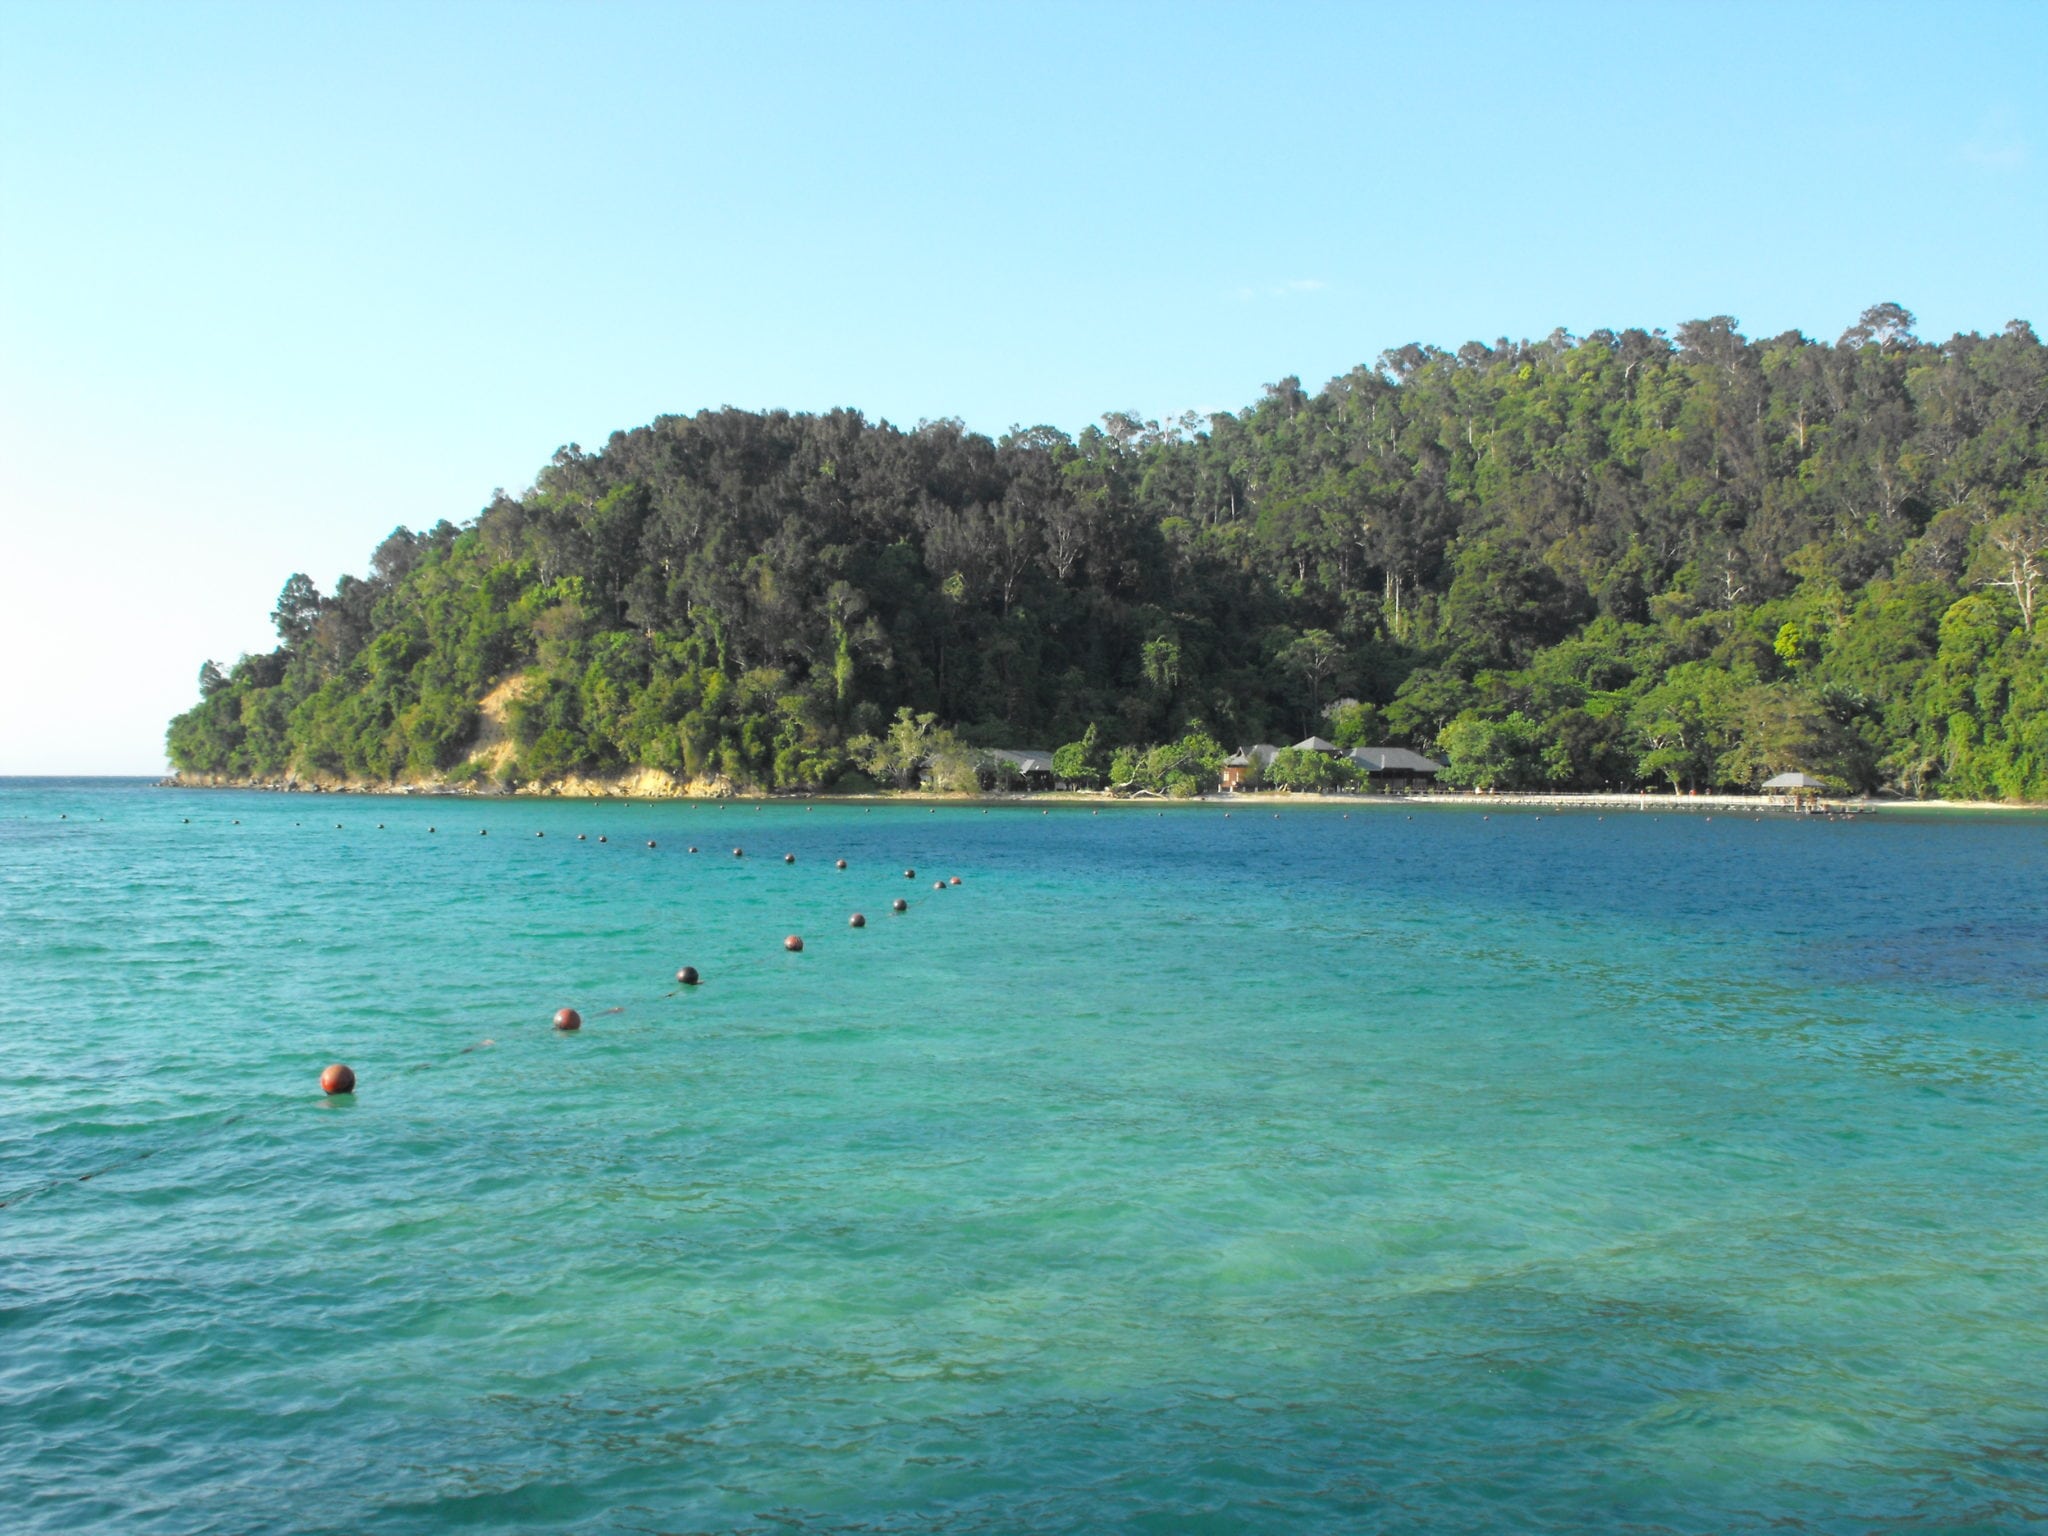 Gaya Island Resort: A Hidden Gem Of Beauty And Tranquility